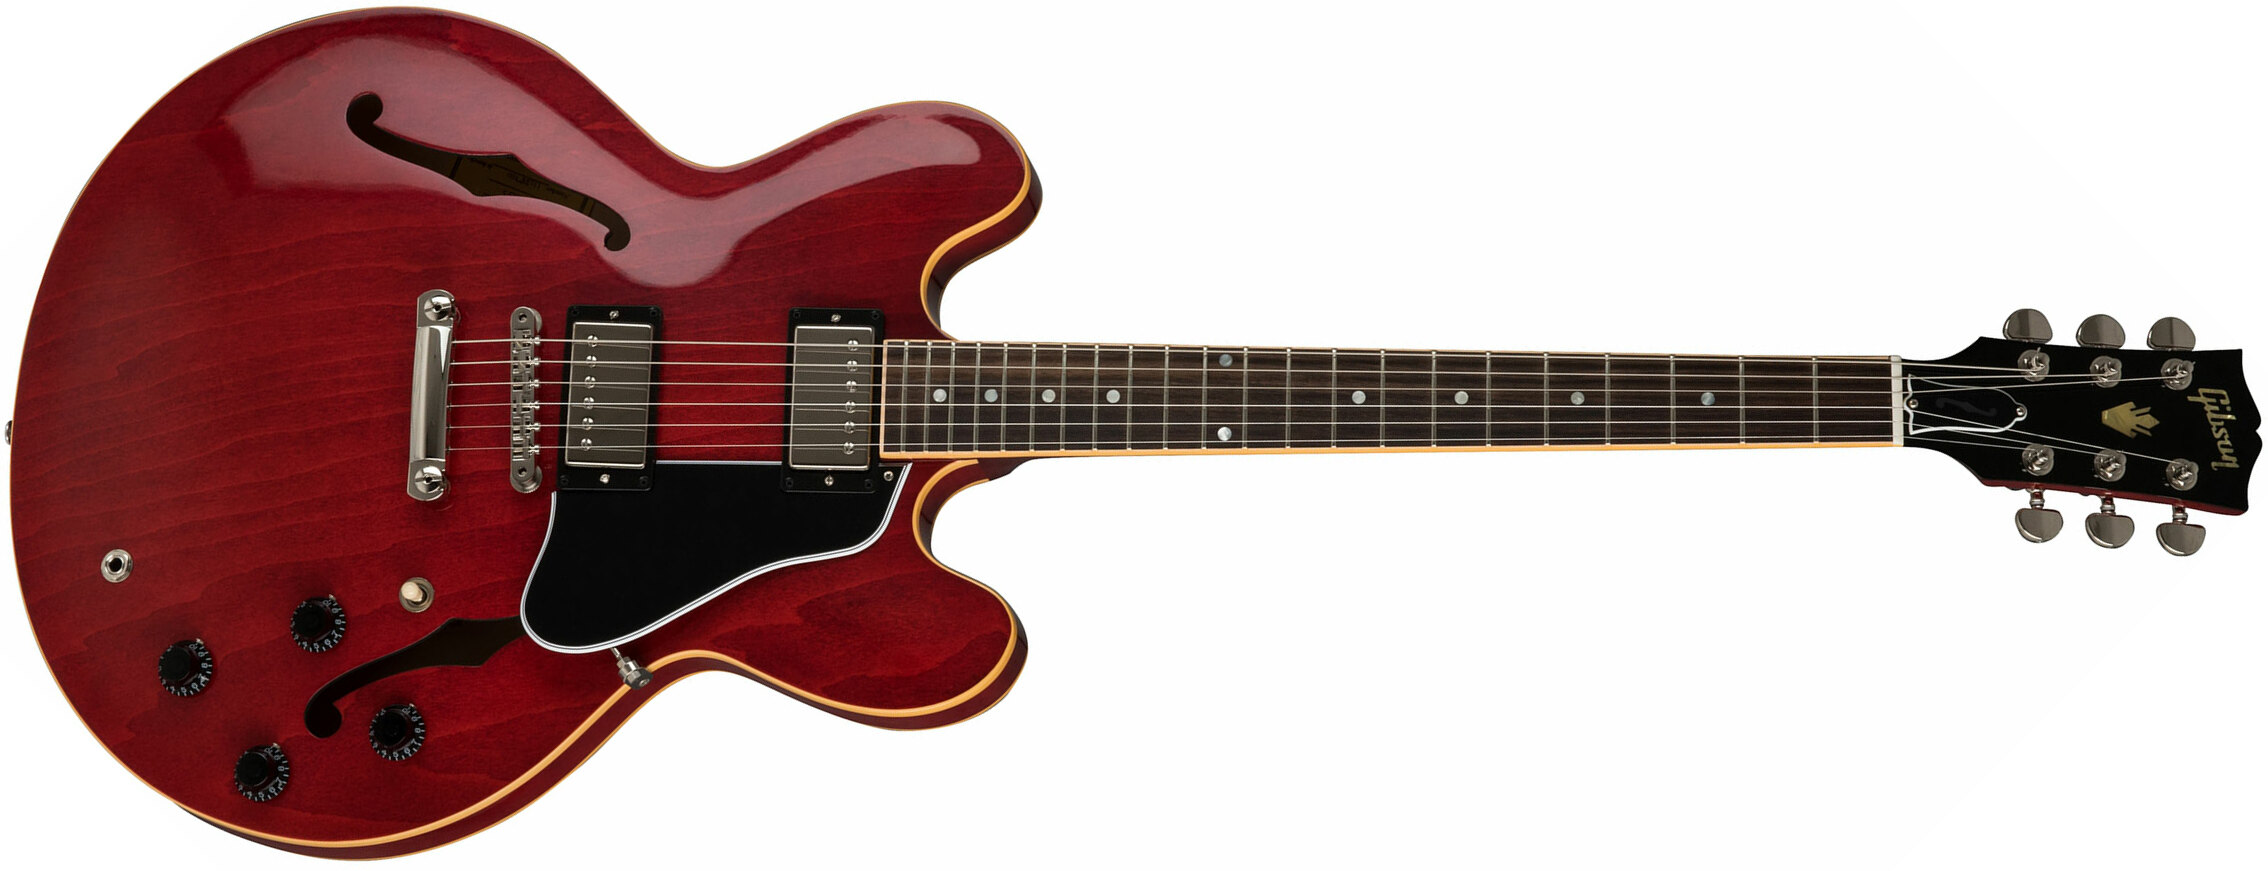 Gibson Es-335 Dot 2019 Hh Ht Rw - Antique Faded Cherry - Semi hollow elektriche gitaar - Main picture